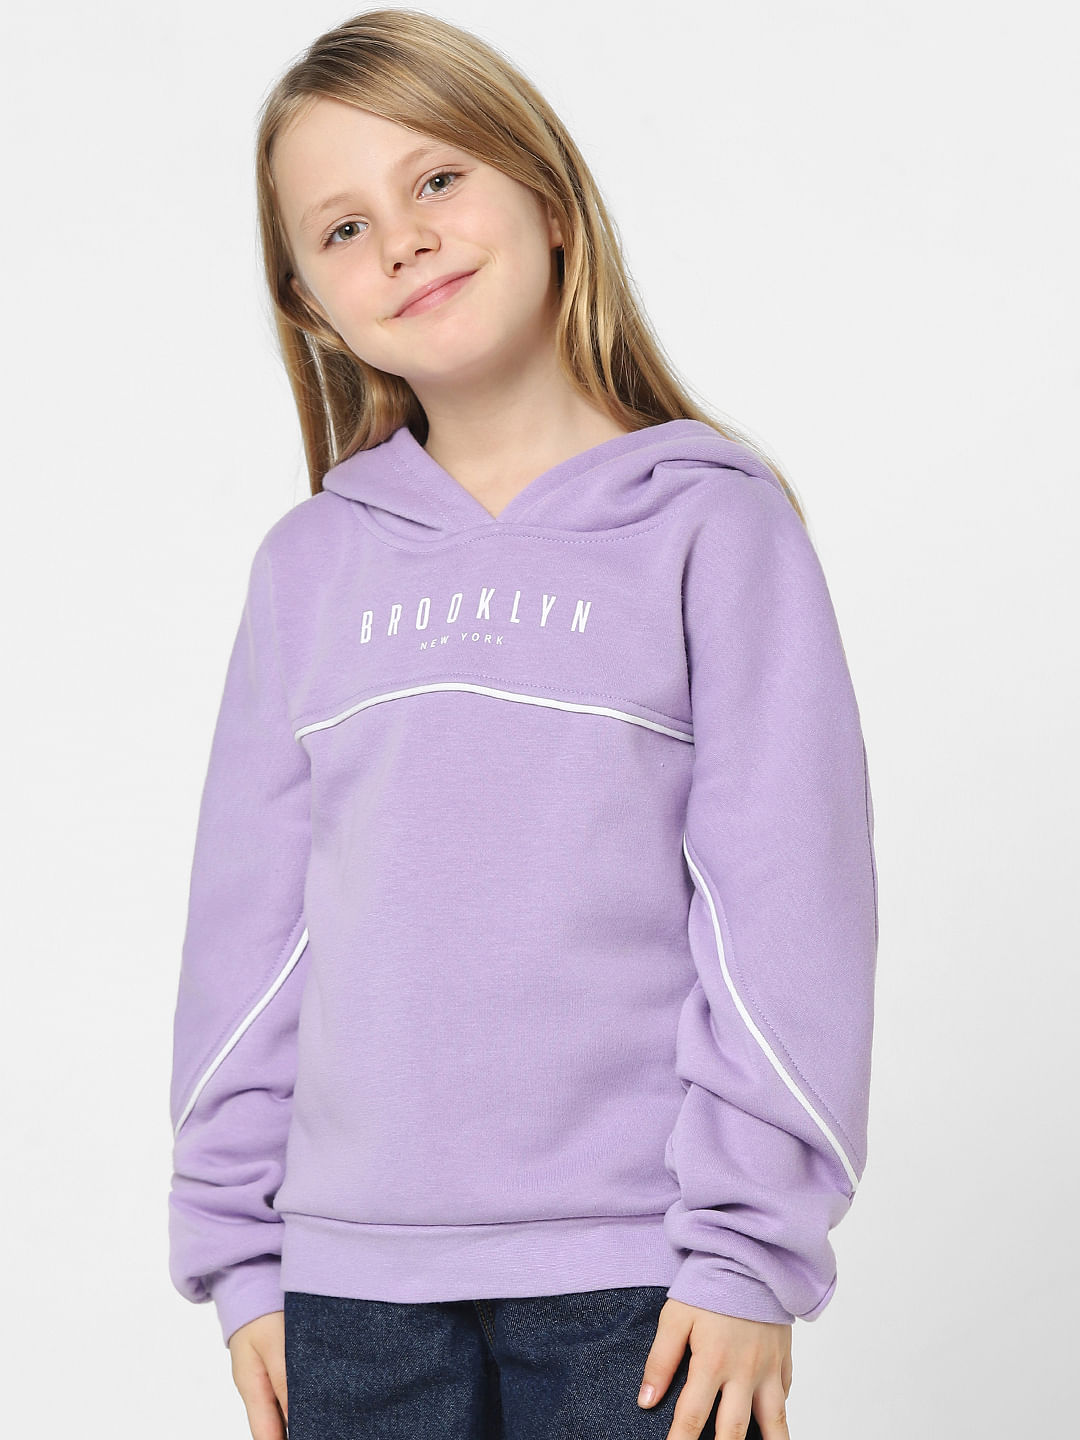 Buy Ed-a-Mamma Kids Blue Cotton Printed Sweatshirt Set for Girls Clothing  Online @ Tata CLiQ